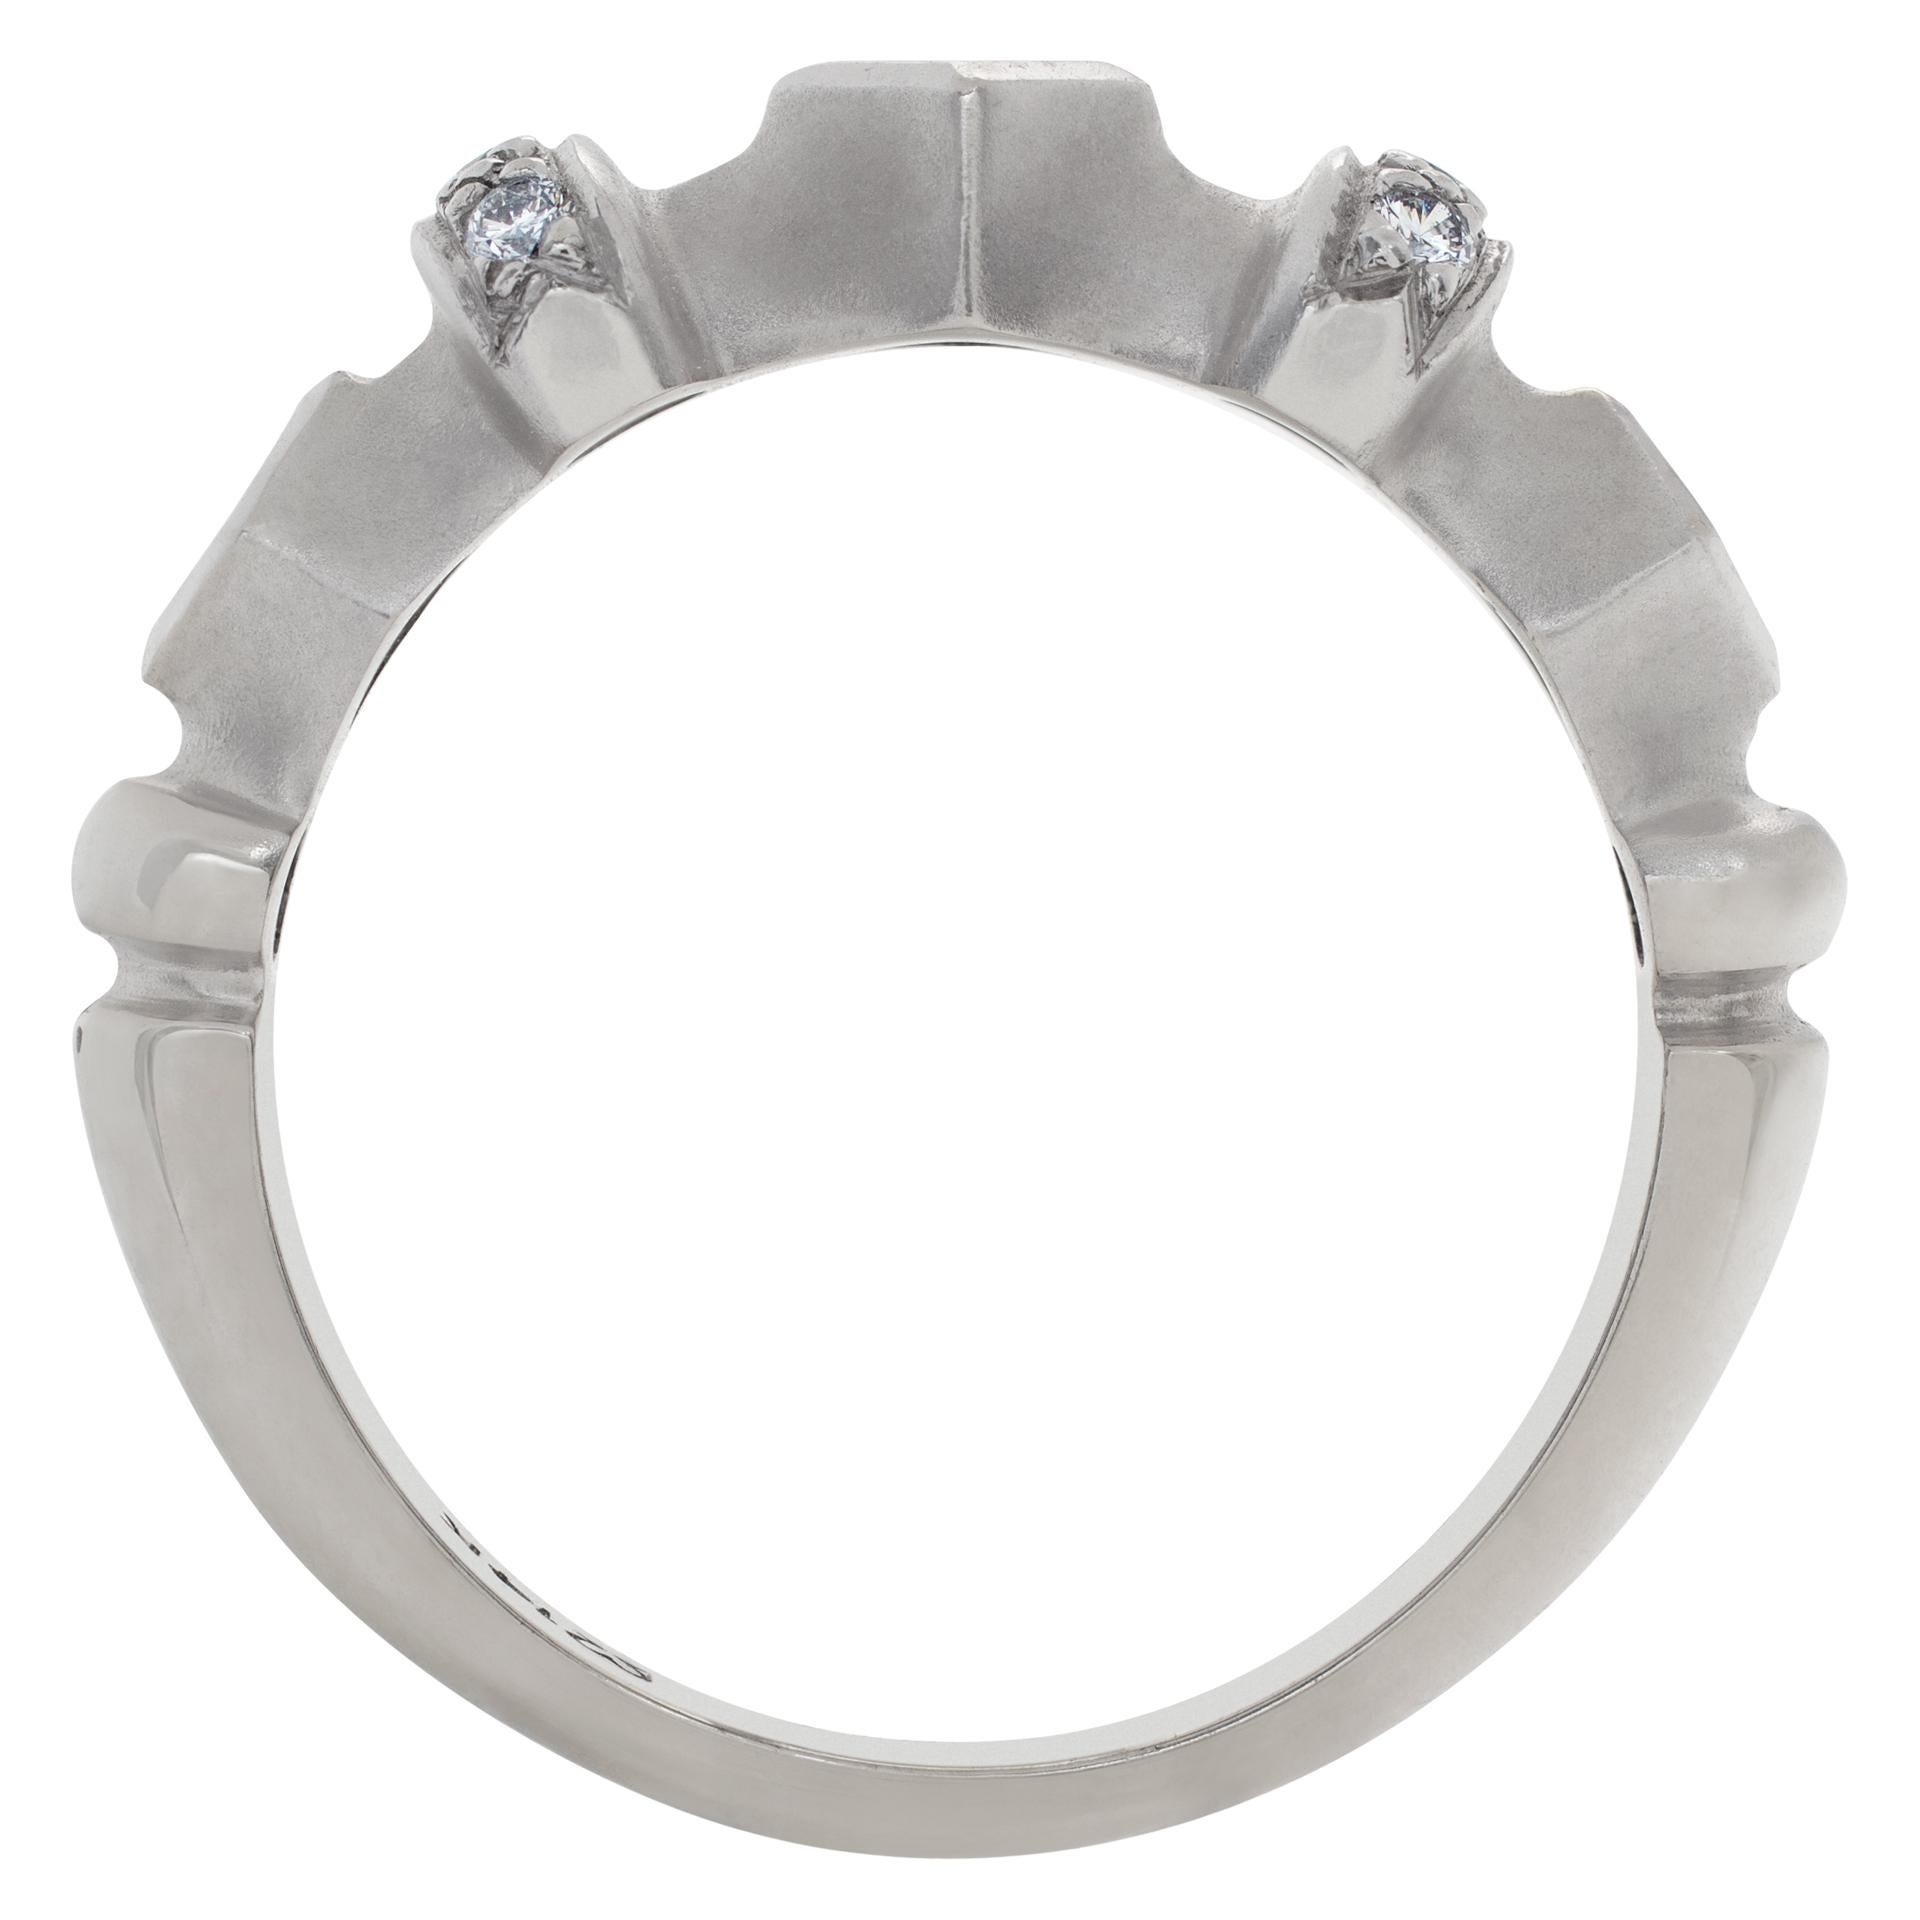 Women's Geometric Diamond Ring Set in Matte Finish 14k White Gold. 0.50 Carats For Sale